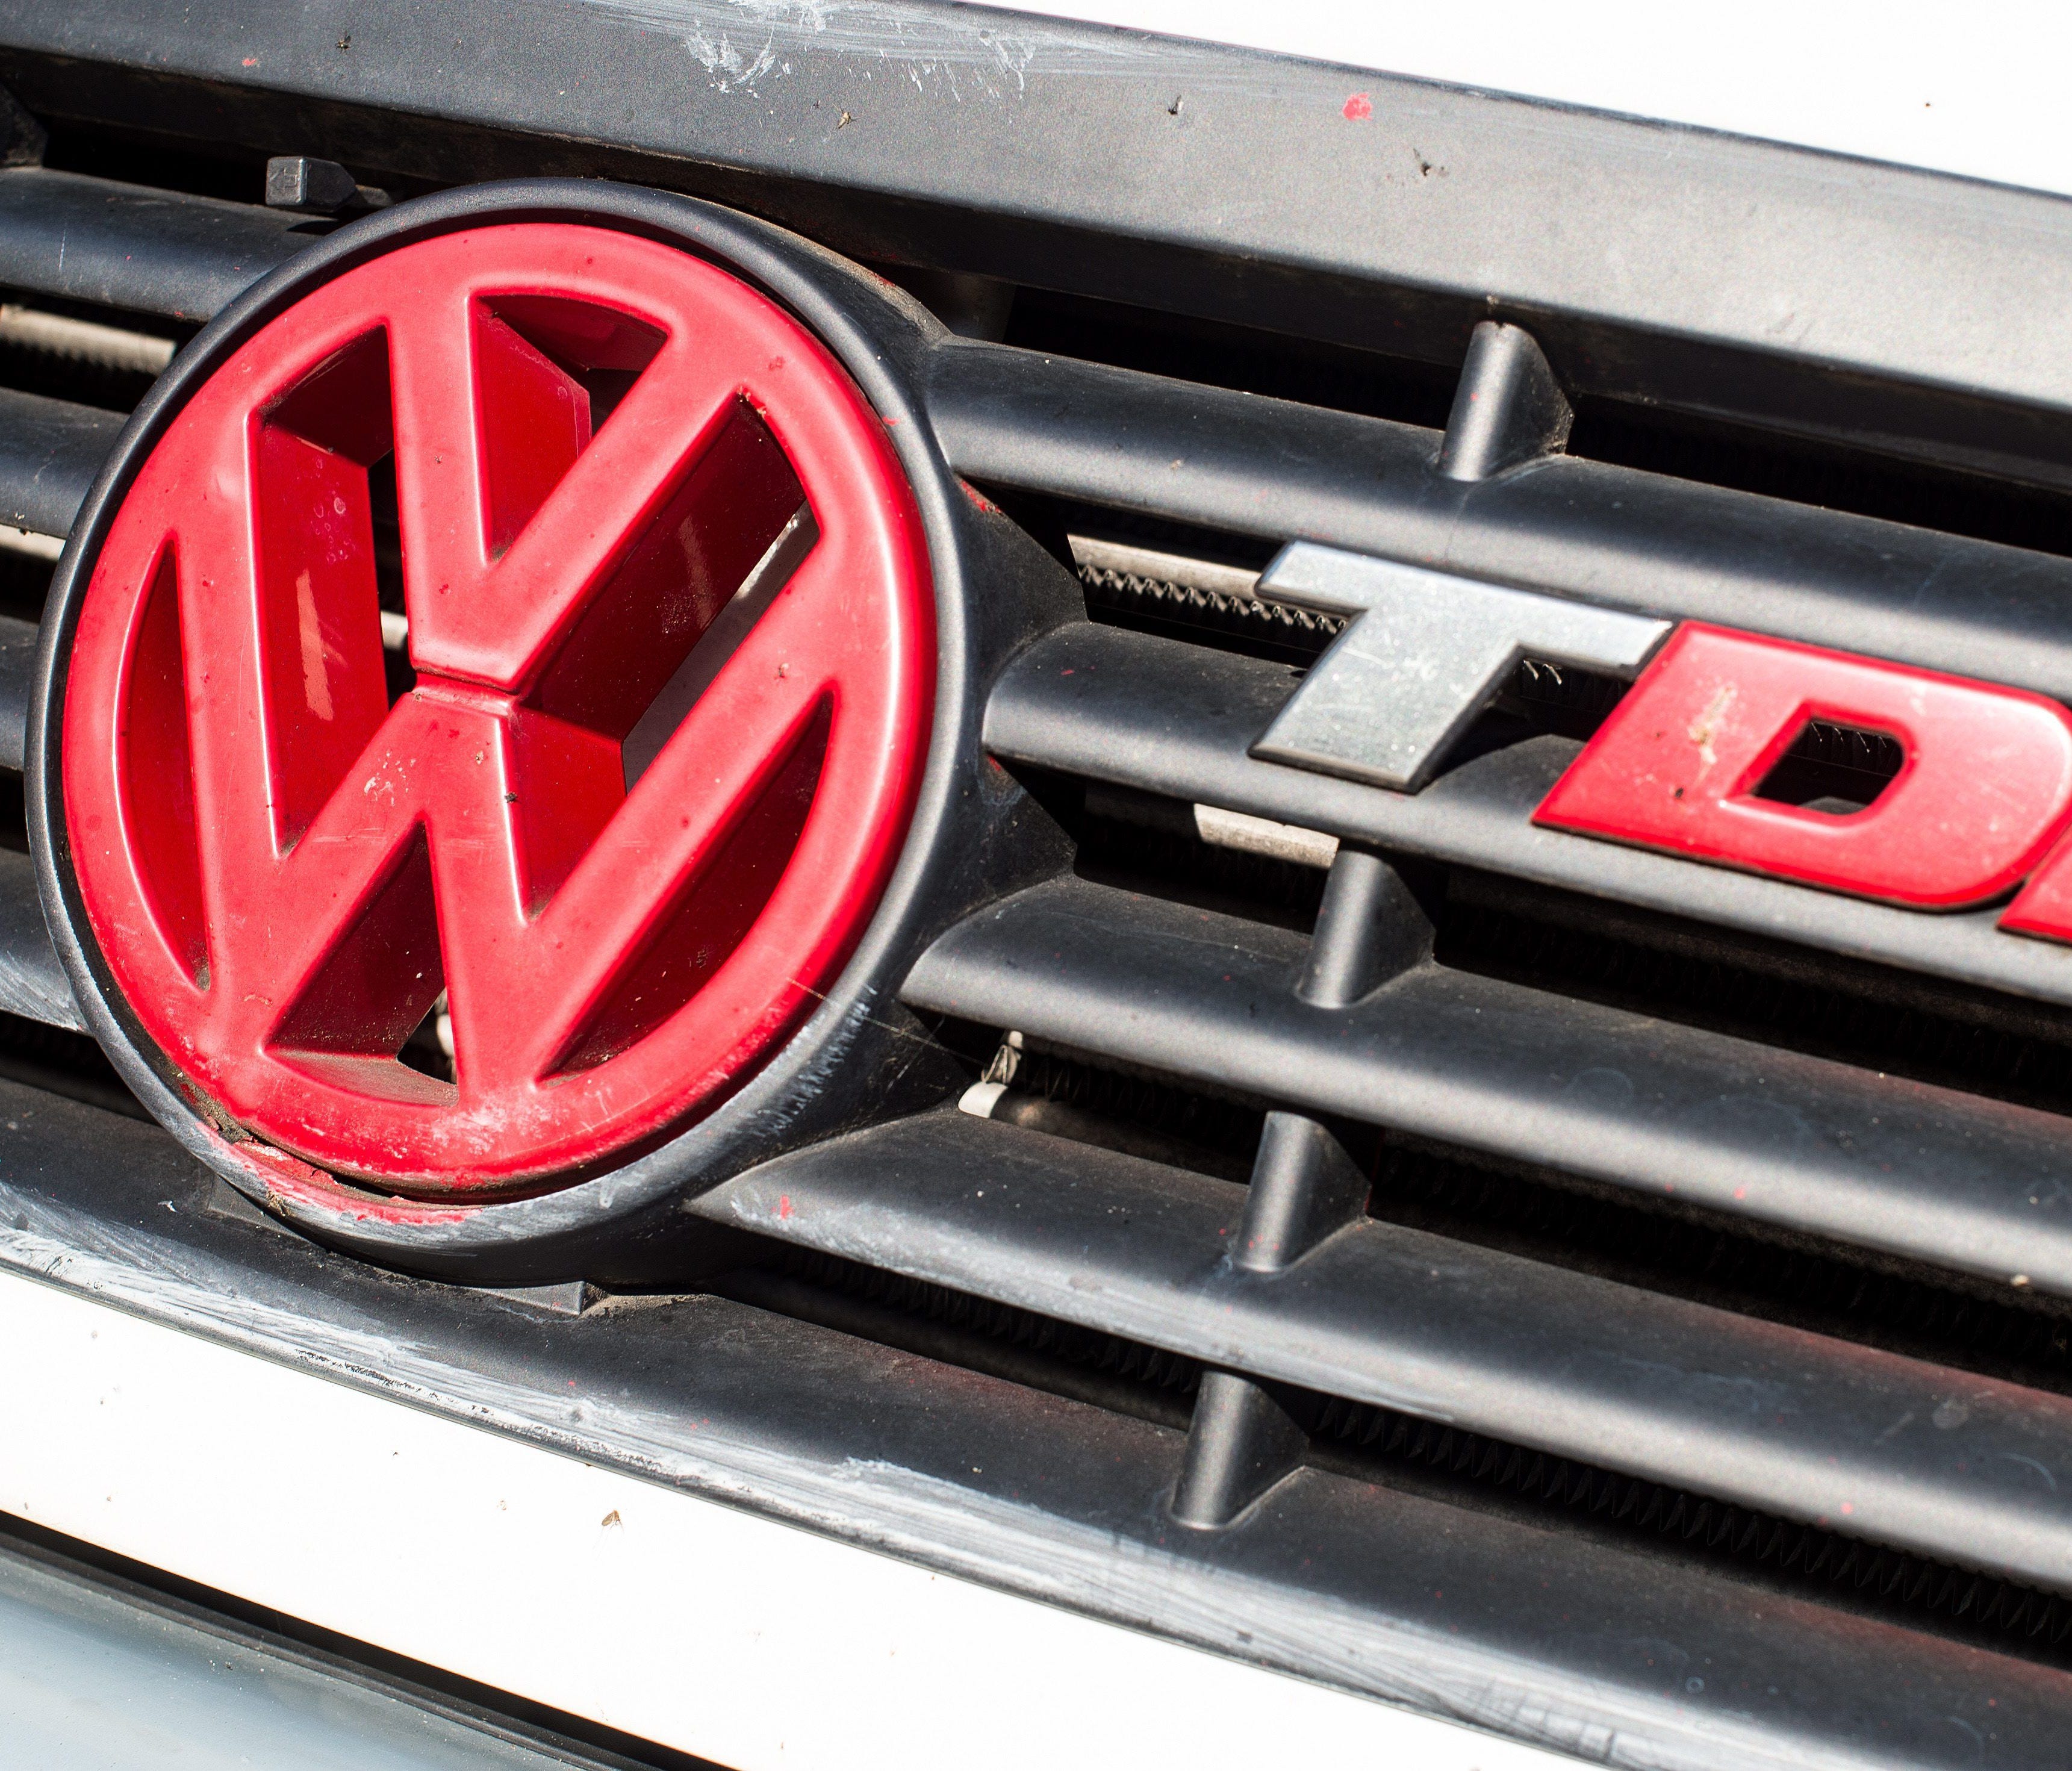 Volkswagen got in trouble over emissions.